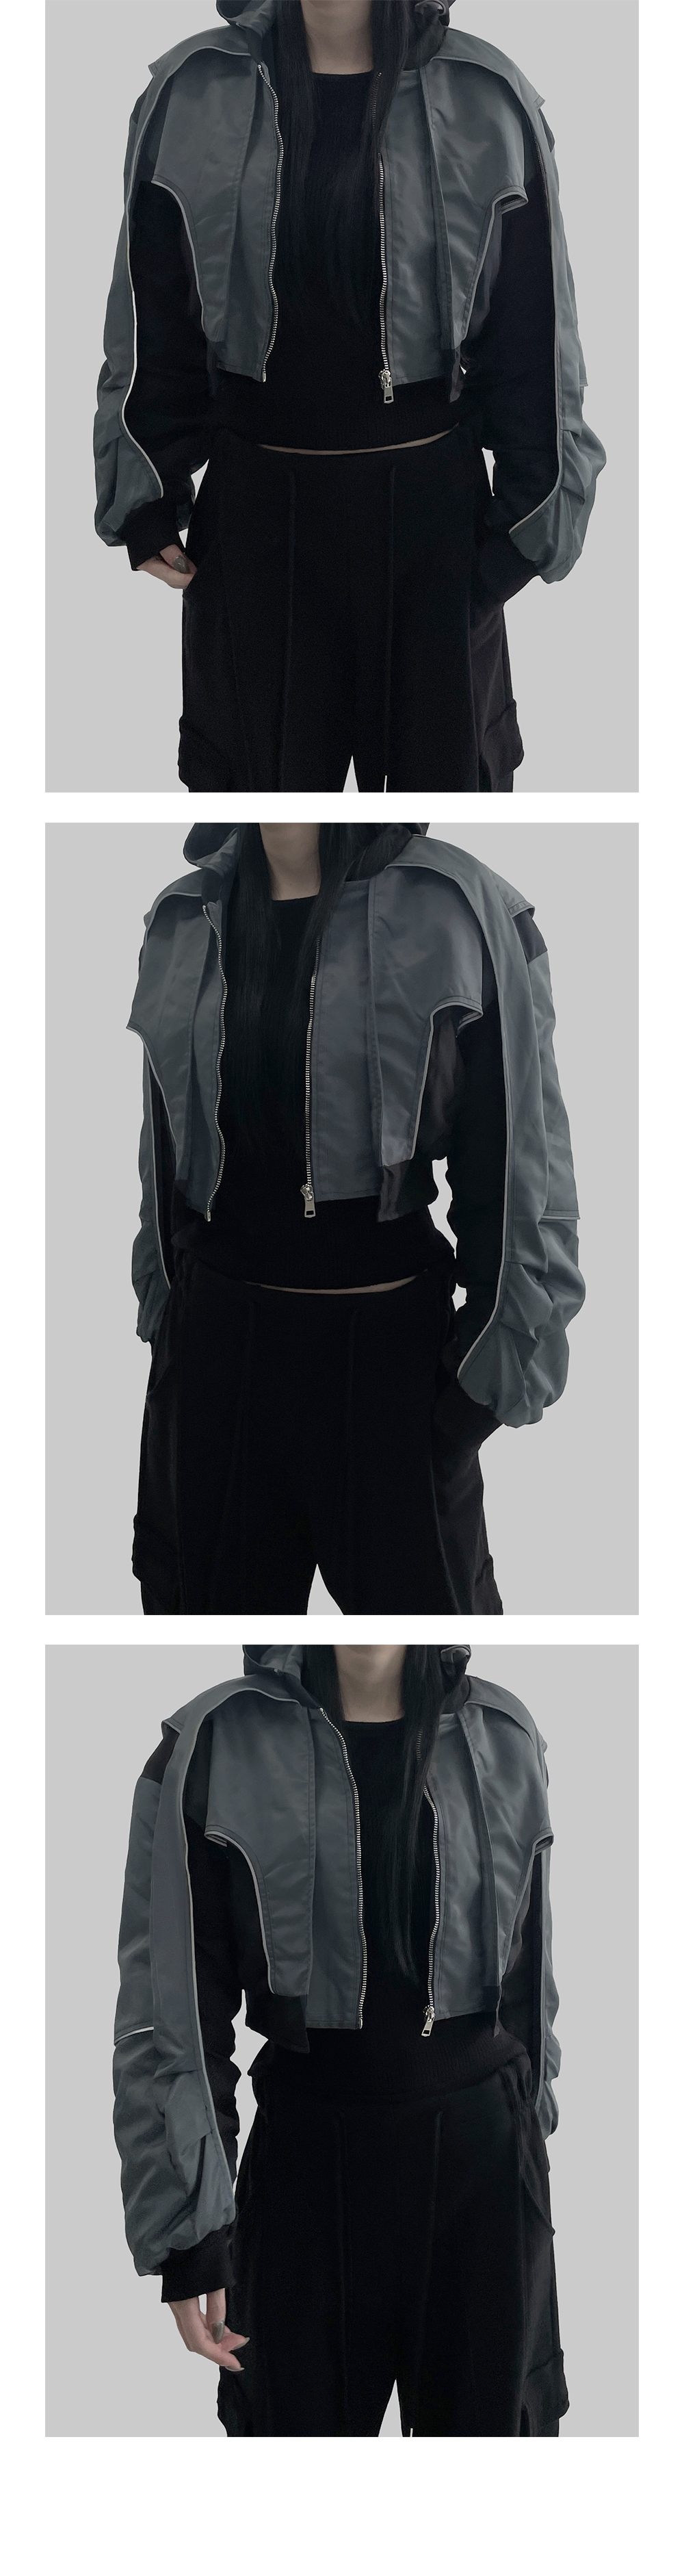 jacket charcoal color image-S1L14